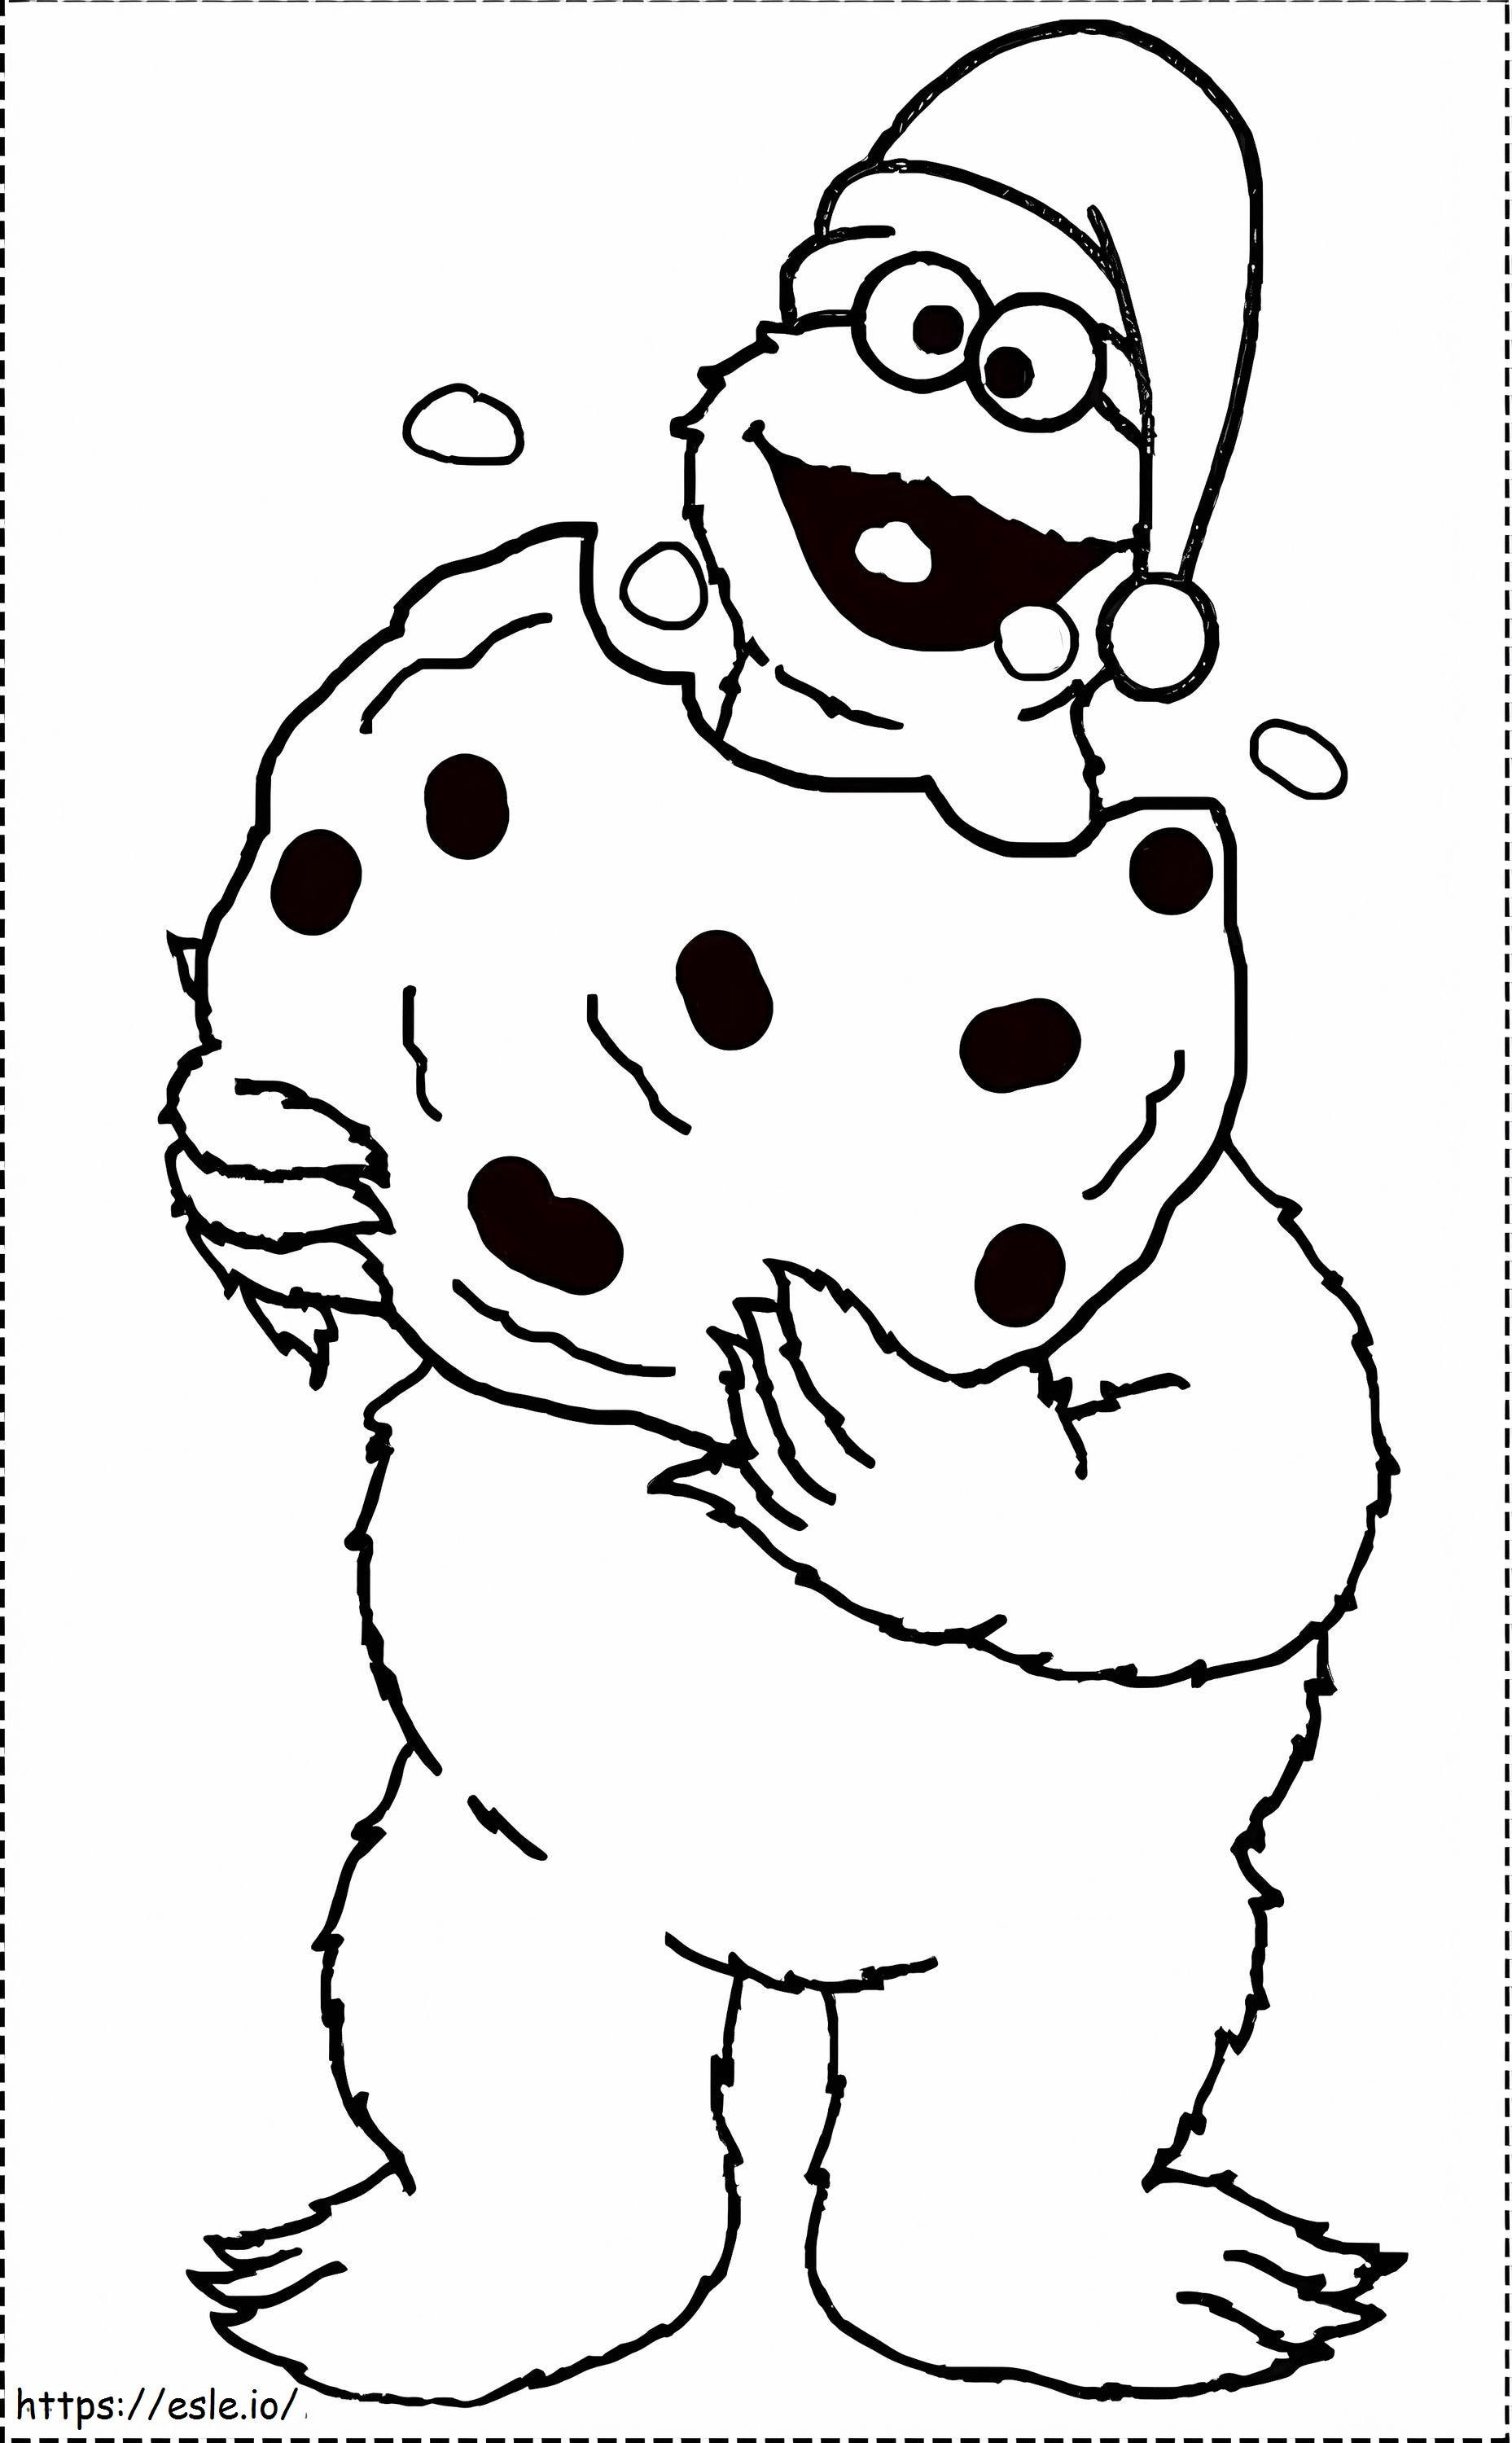 Elmo Eating Big Cookie coloring page